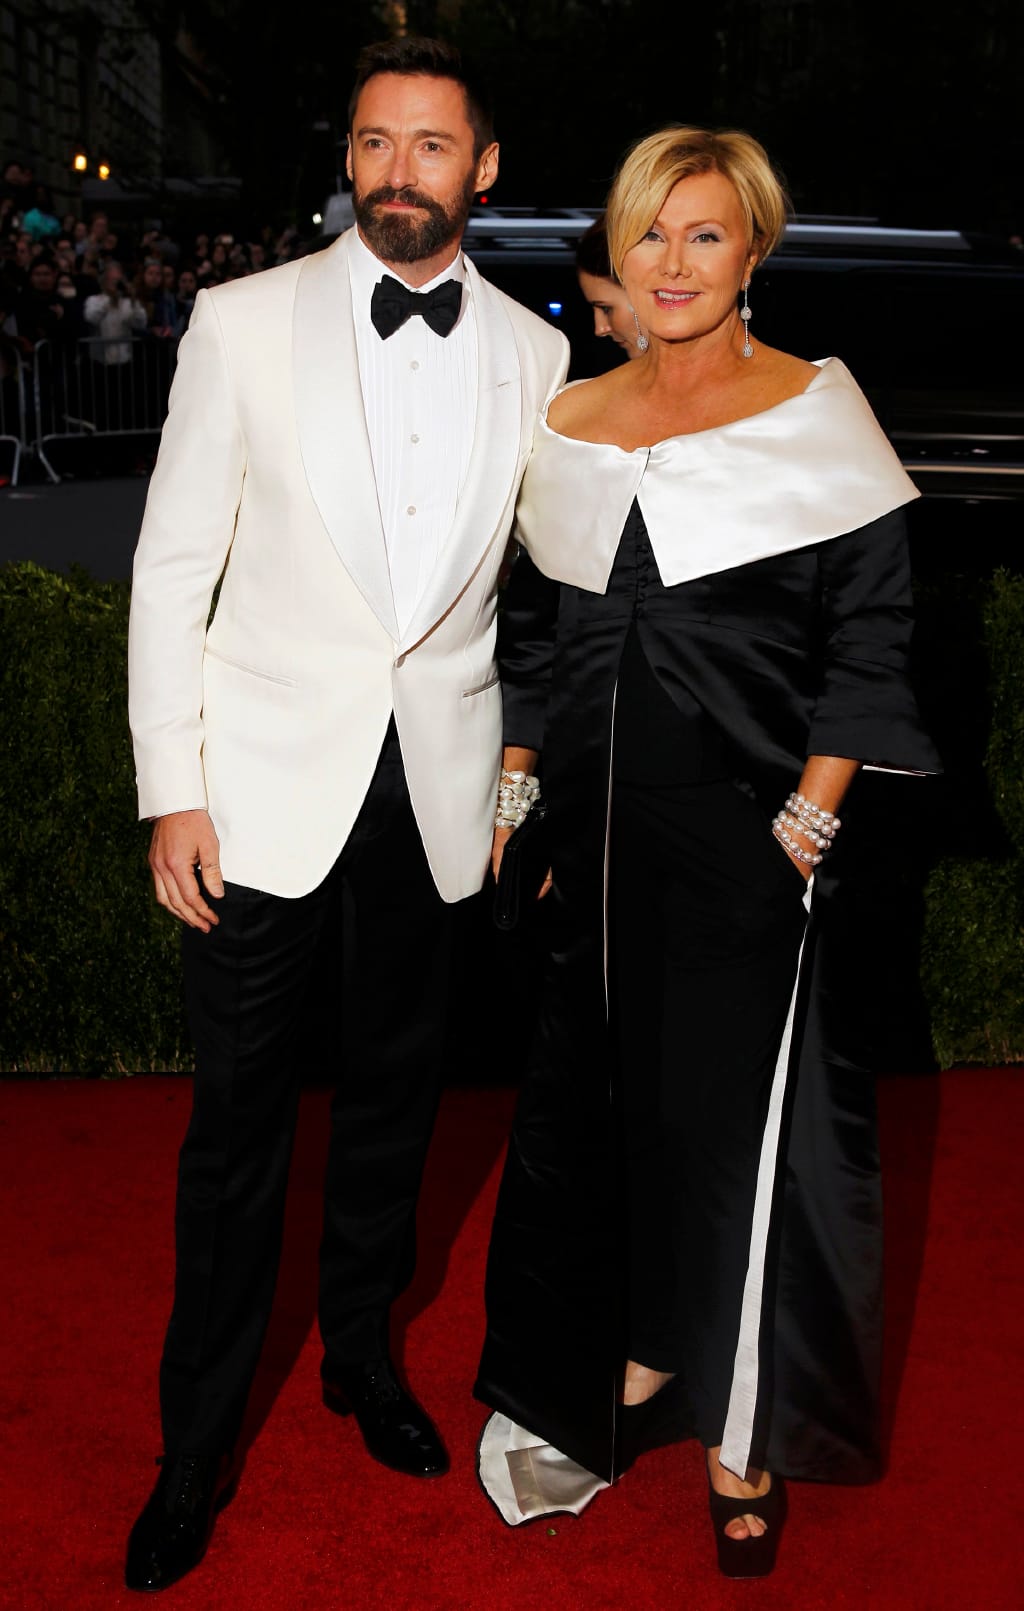 Hugh Jackman e Deborra-Lee Furness - Gala Beneficente do Costume Institute do MET de Nova Iorque 2014 Foto: Reuters